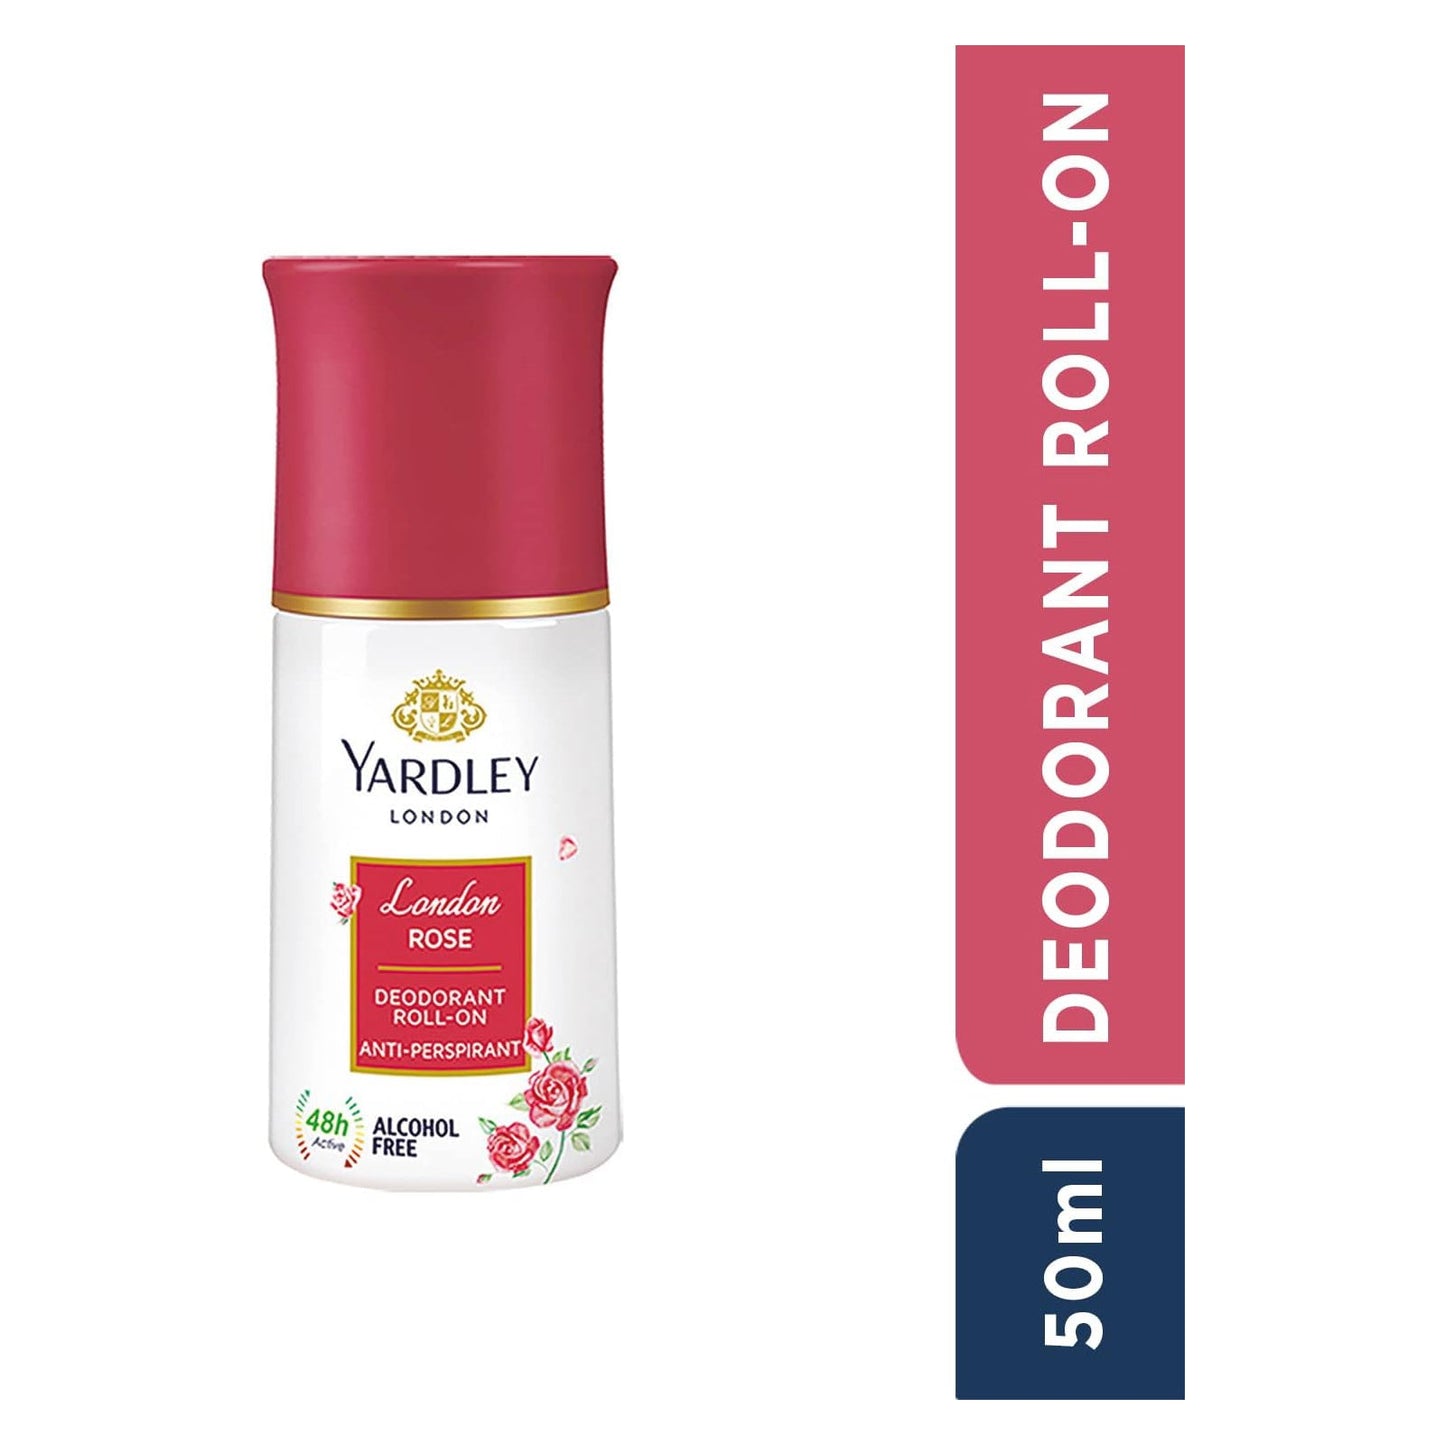 Yardley London Rose Anti-Perspirant Roll On, 50 ml